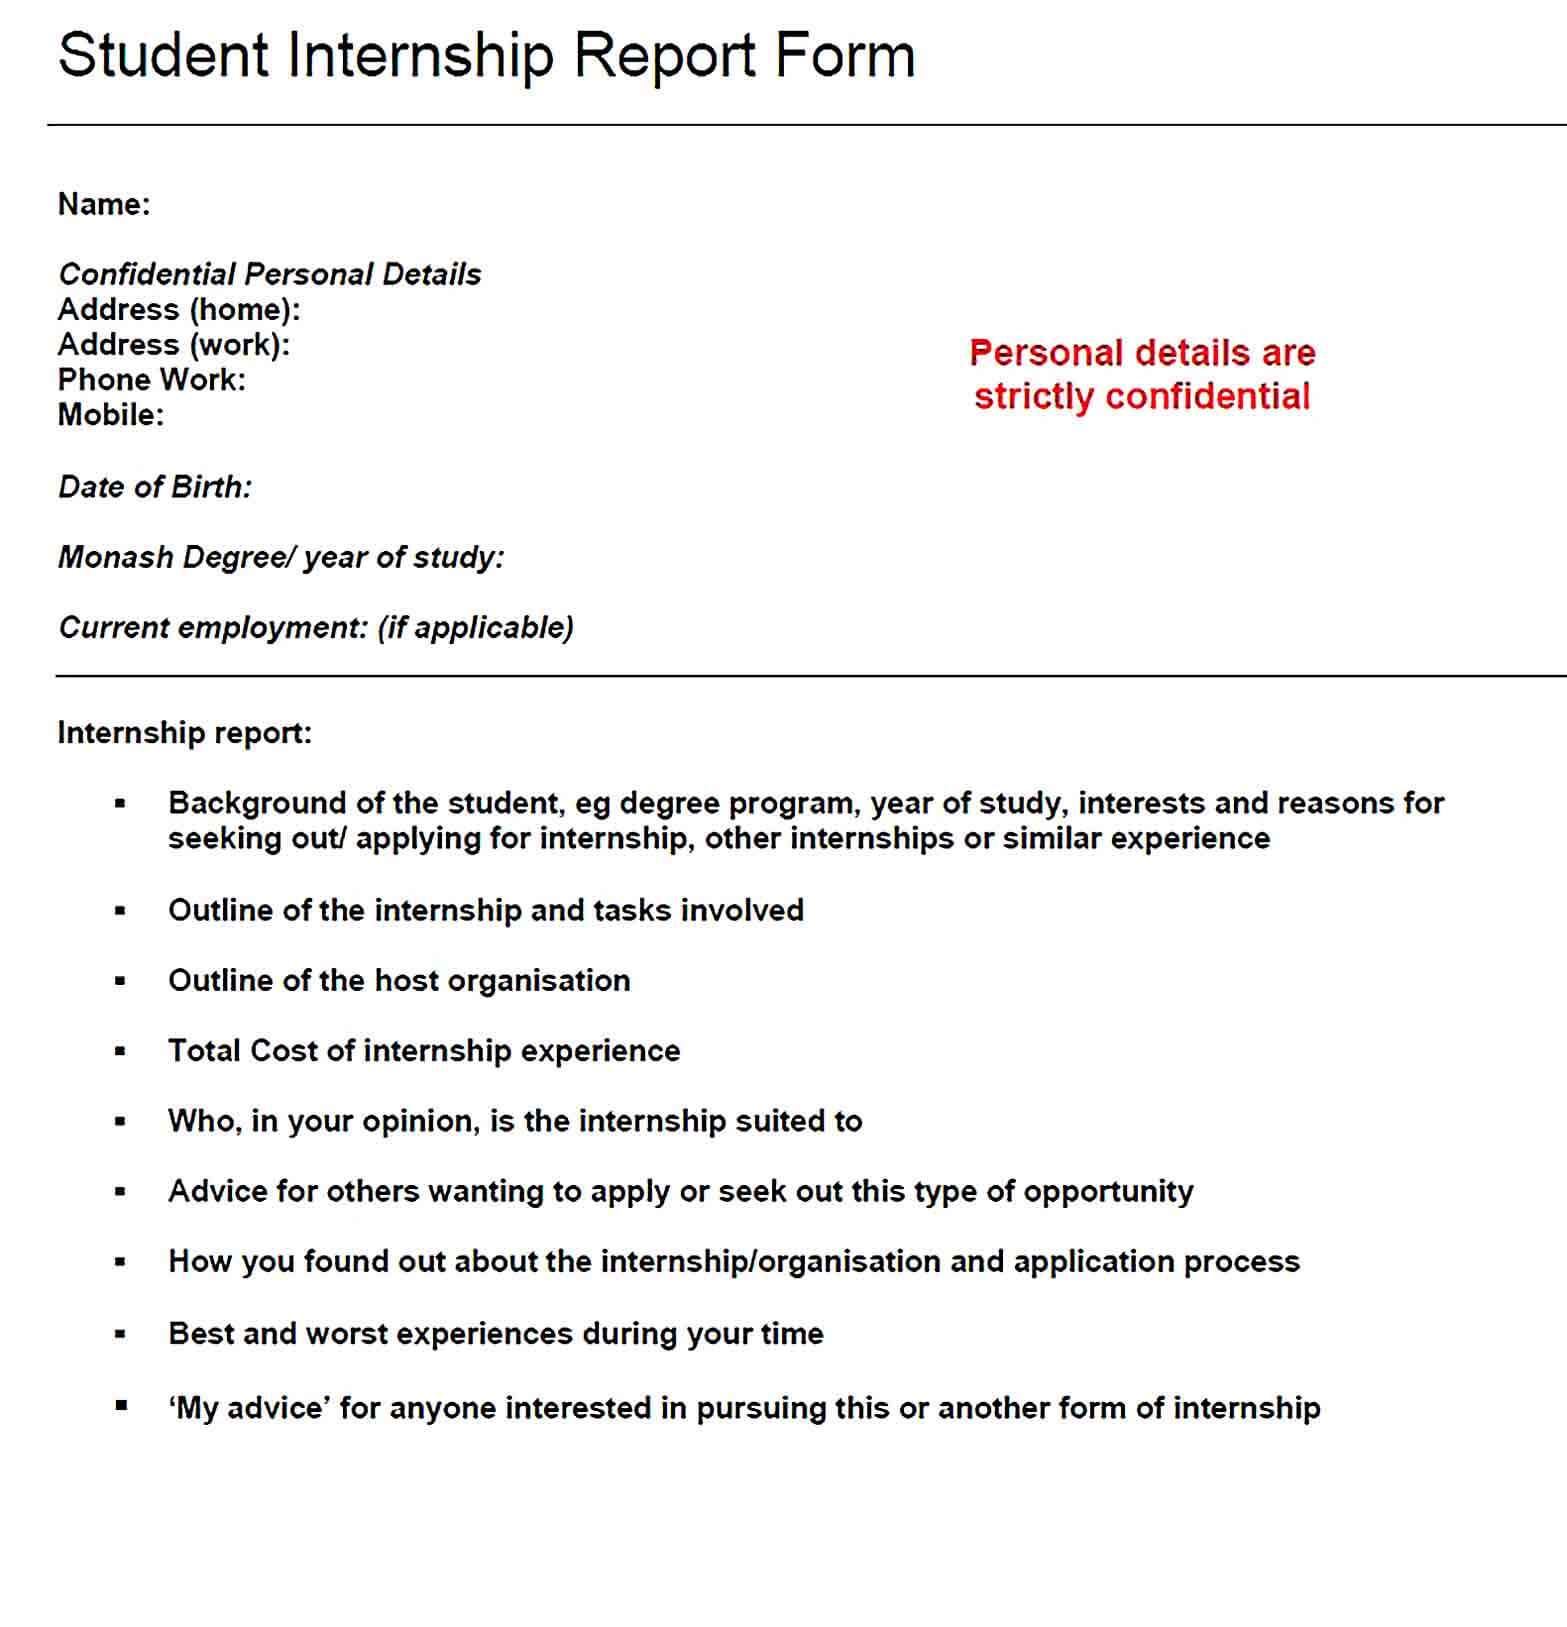 Student Internship Report Form